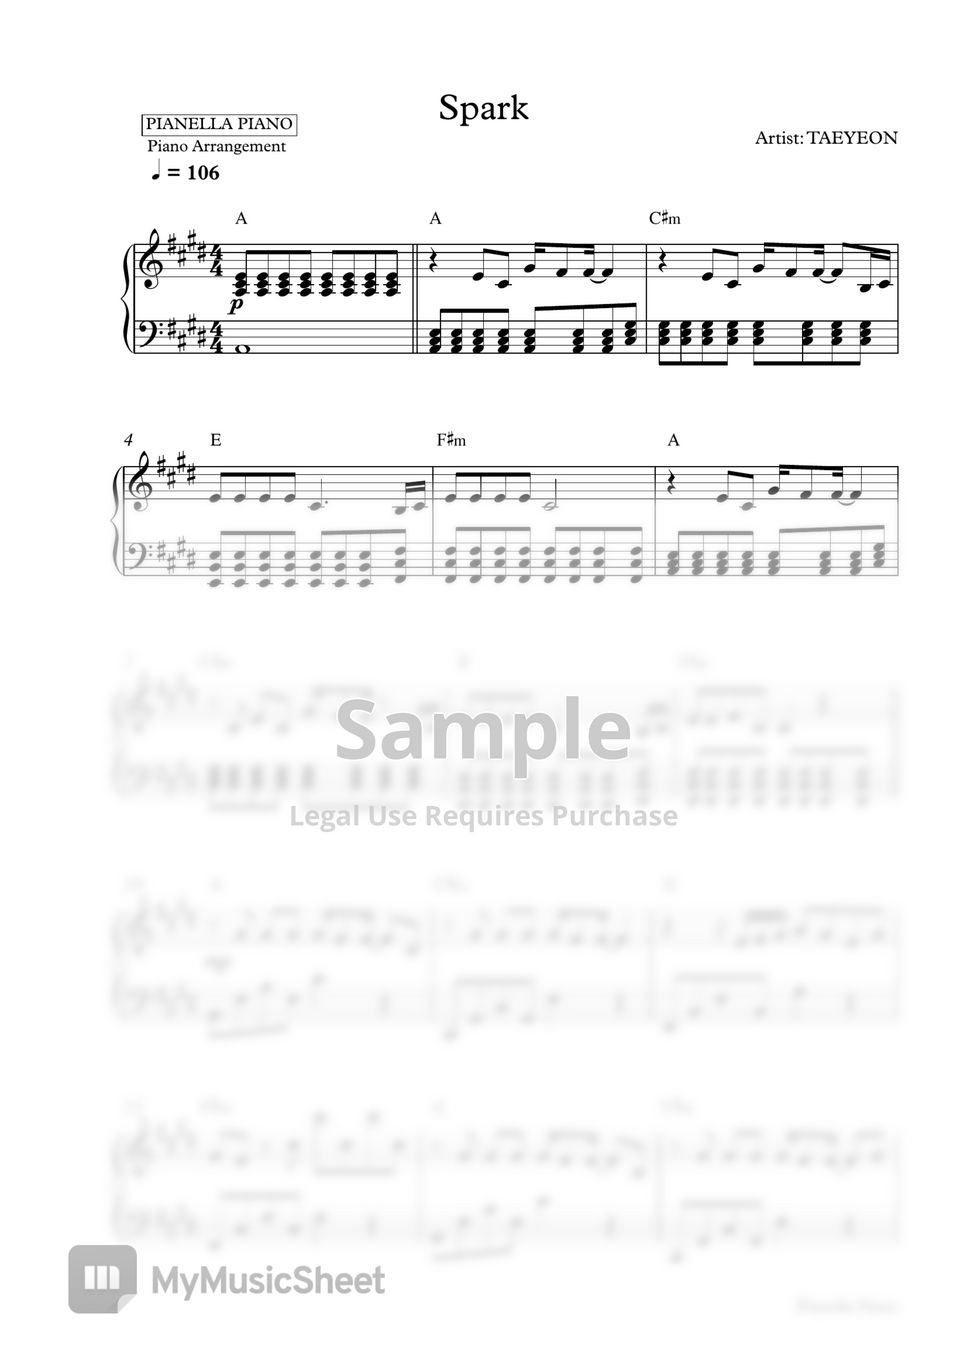 Taeyeon - Spark (Piano Sheet) by Pianella Piano